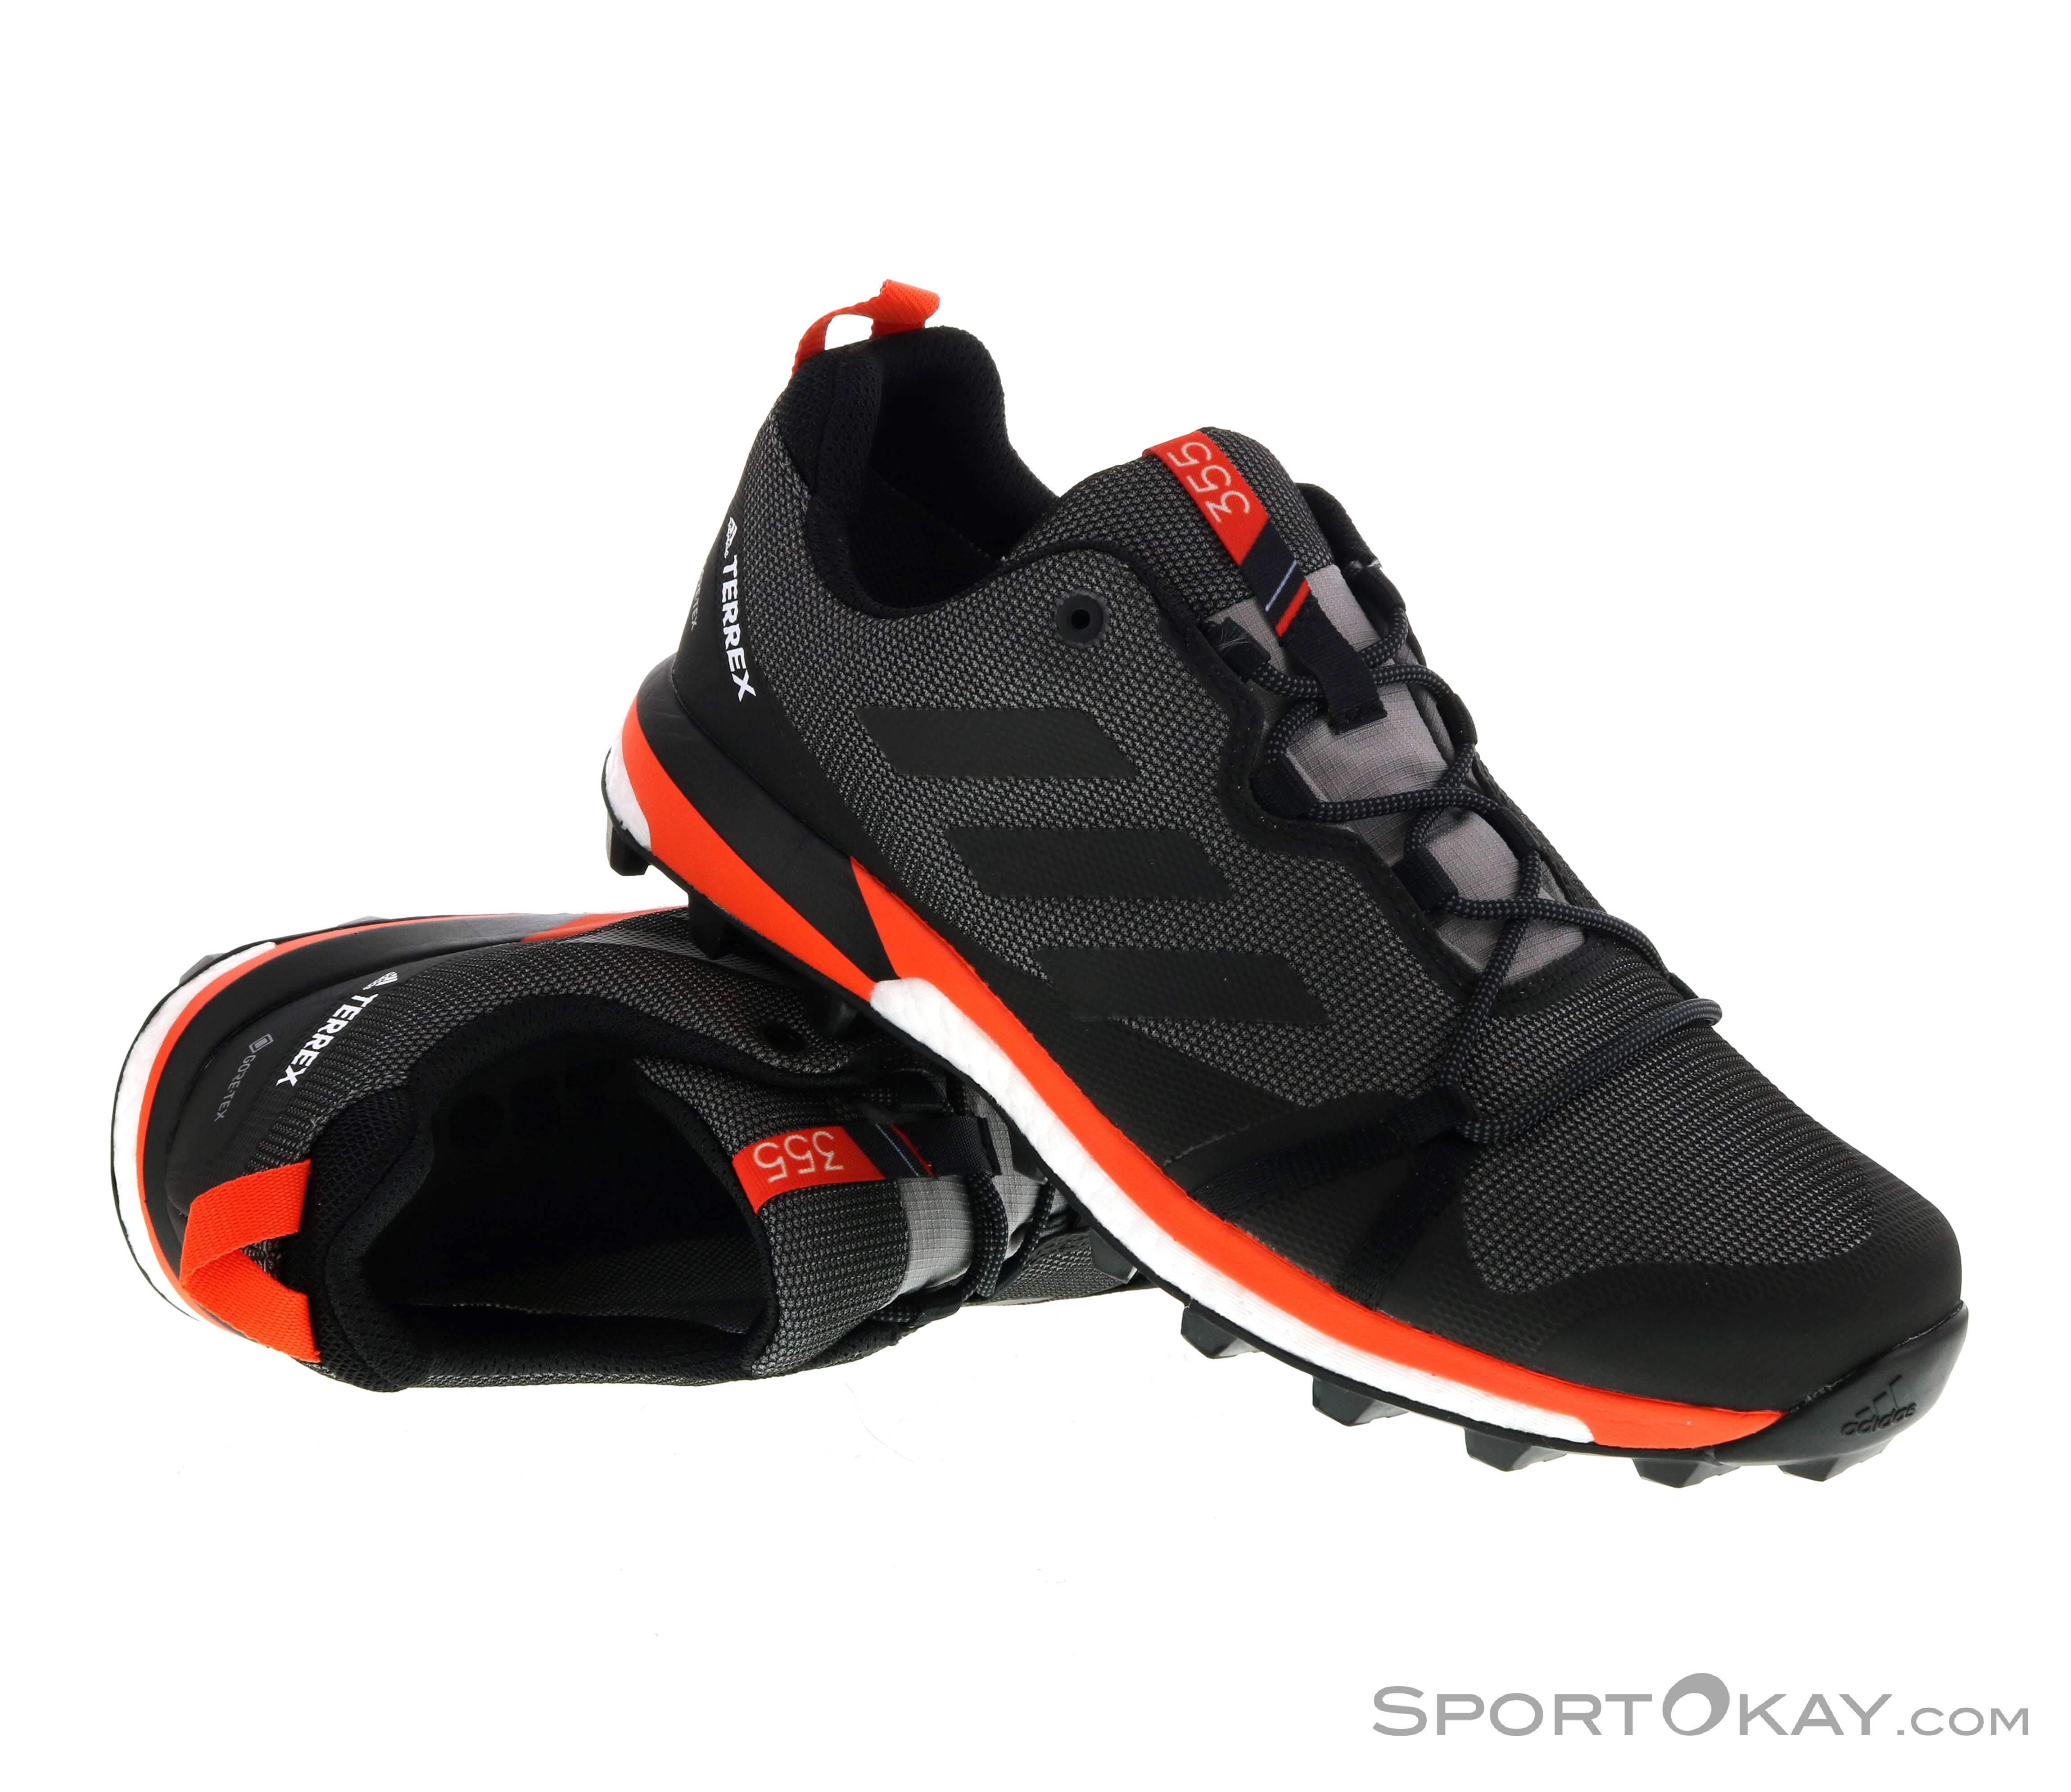 Scarpe Trekking Adidas Flash Sales, UP TO 54% OFF | www.ldeventos.com جوالات نون اصليه